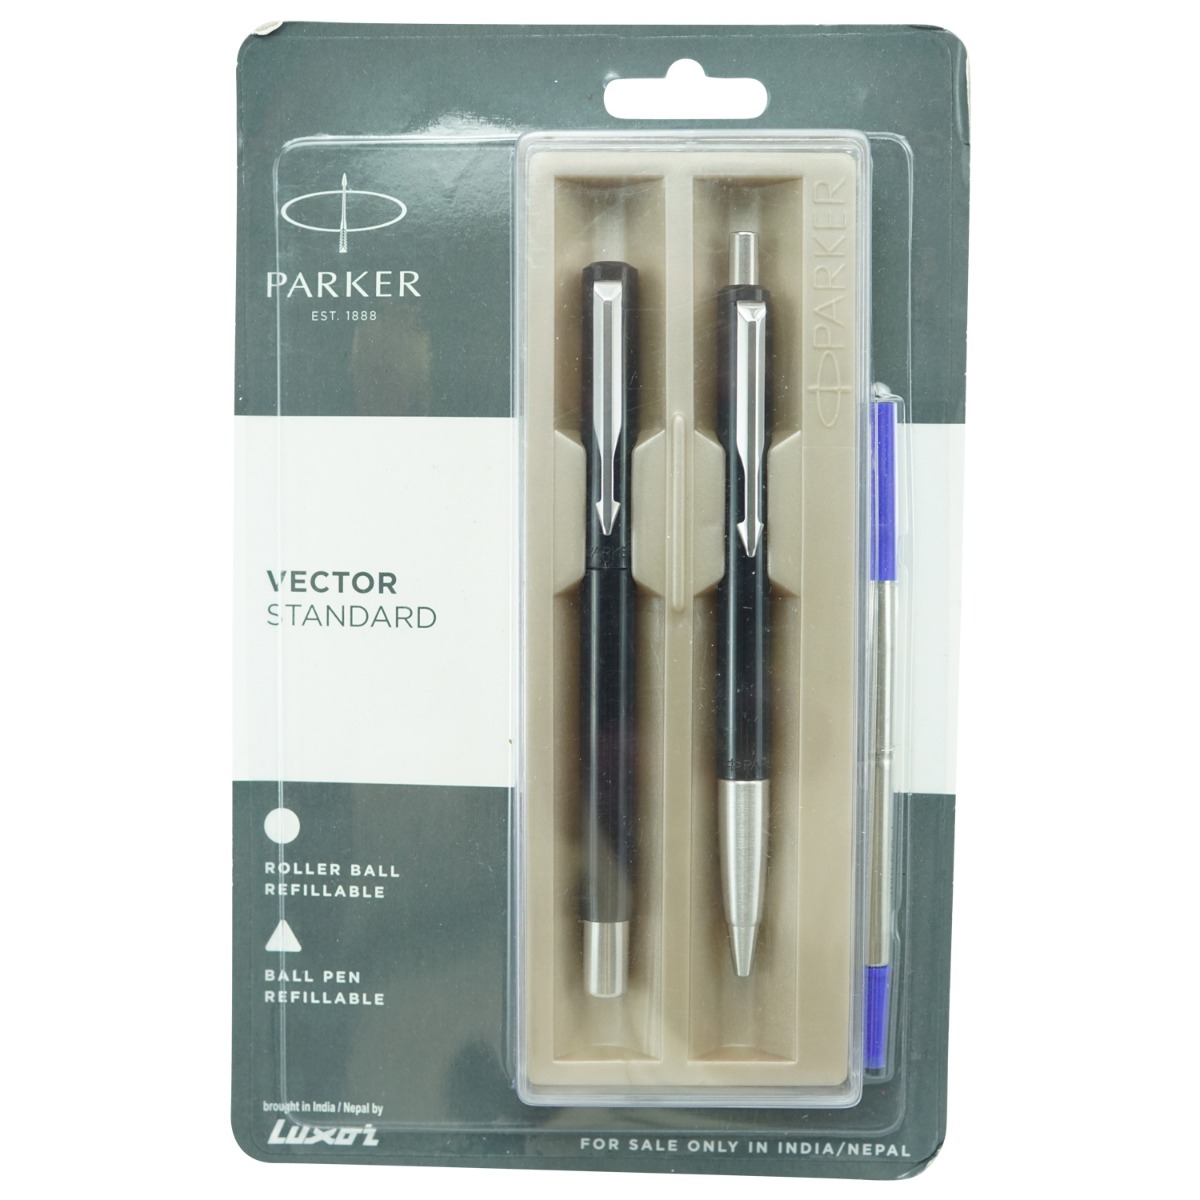 Parker Vector Standard Model:16089  Balck Color Body With Silver Clip Roller Ball Pen and  Ball  Pen Set